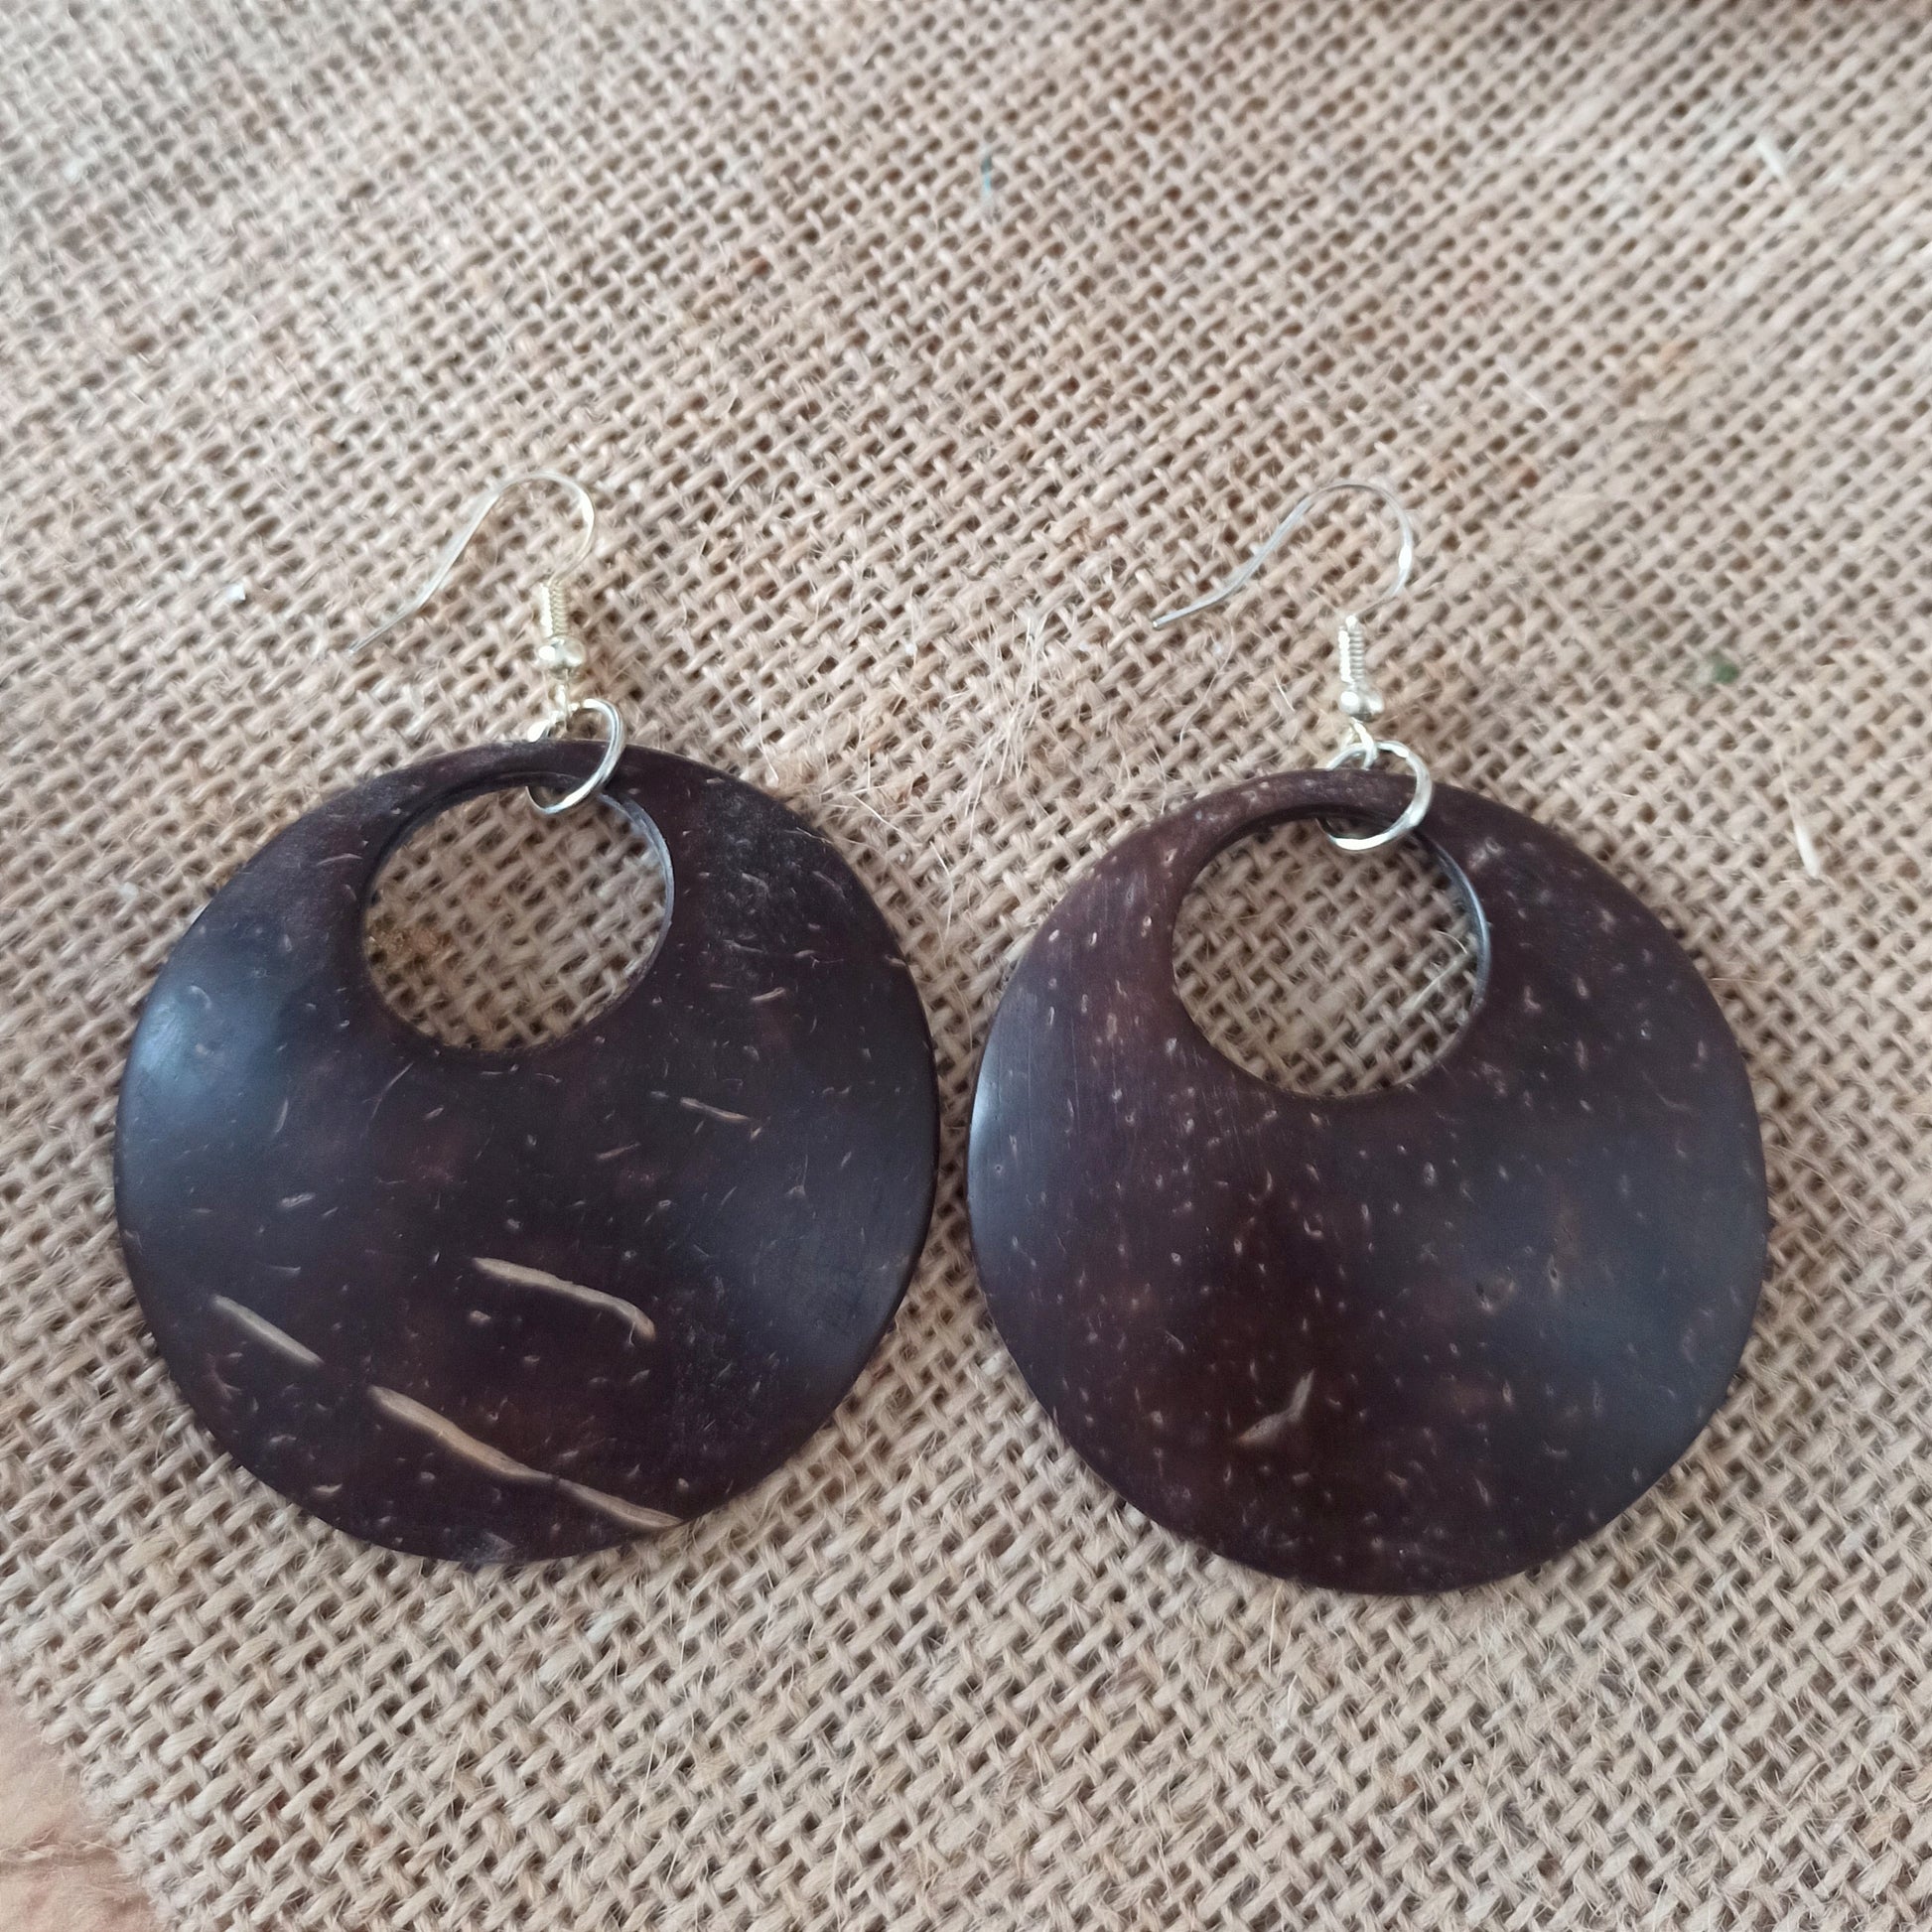 Coconut Shell Boho Earrings Natural upcycled earrings 